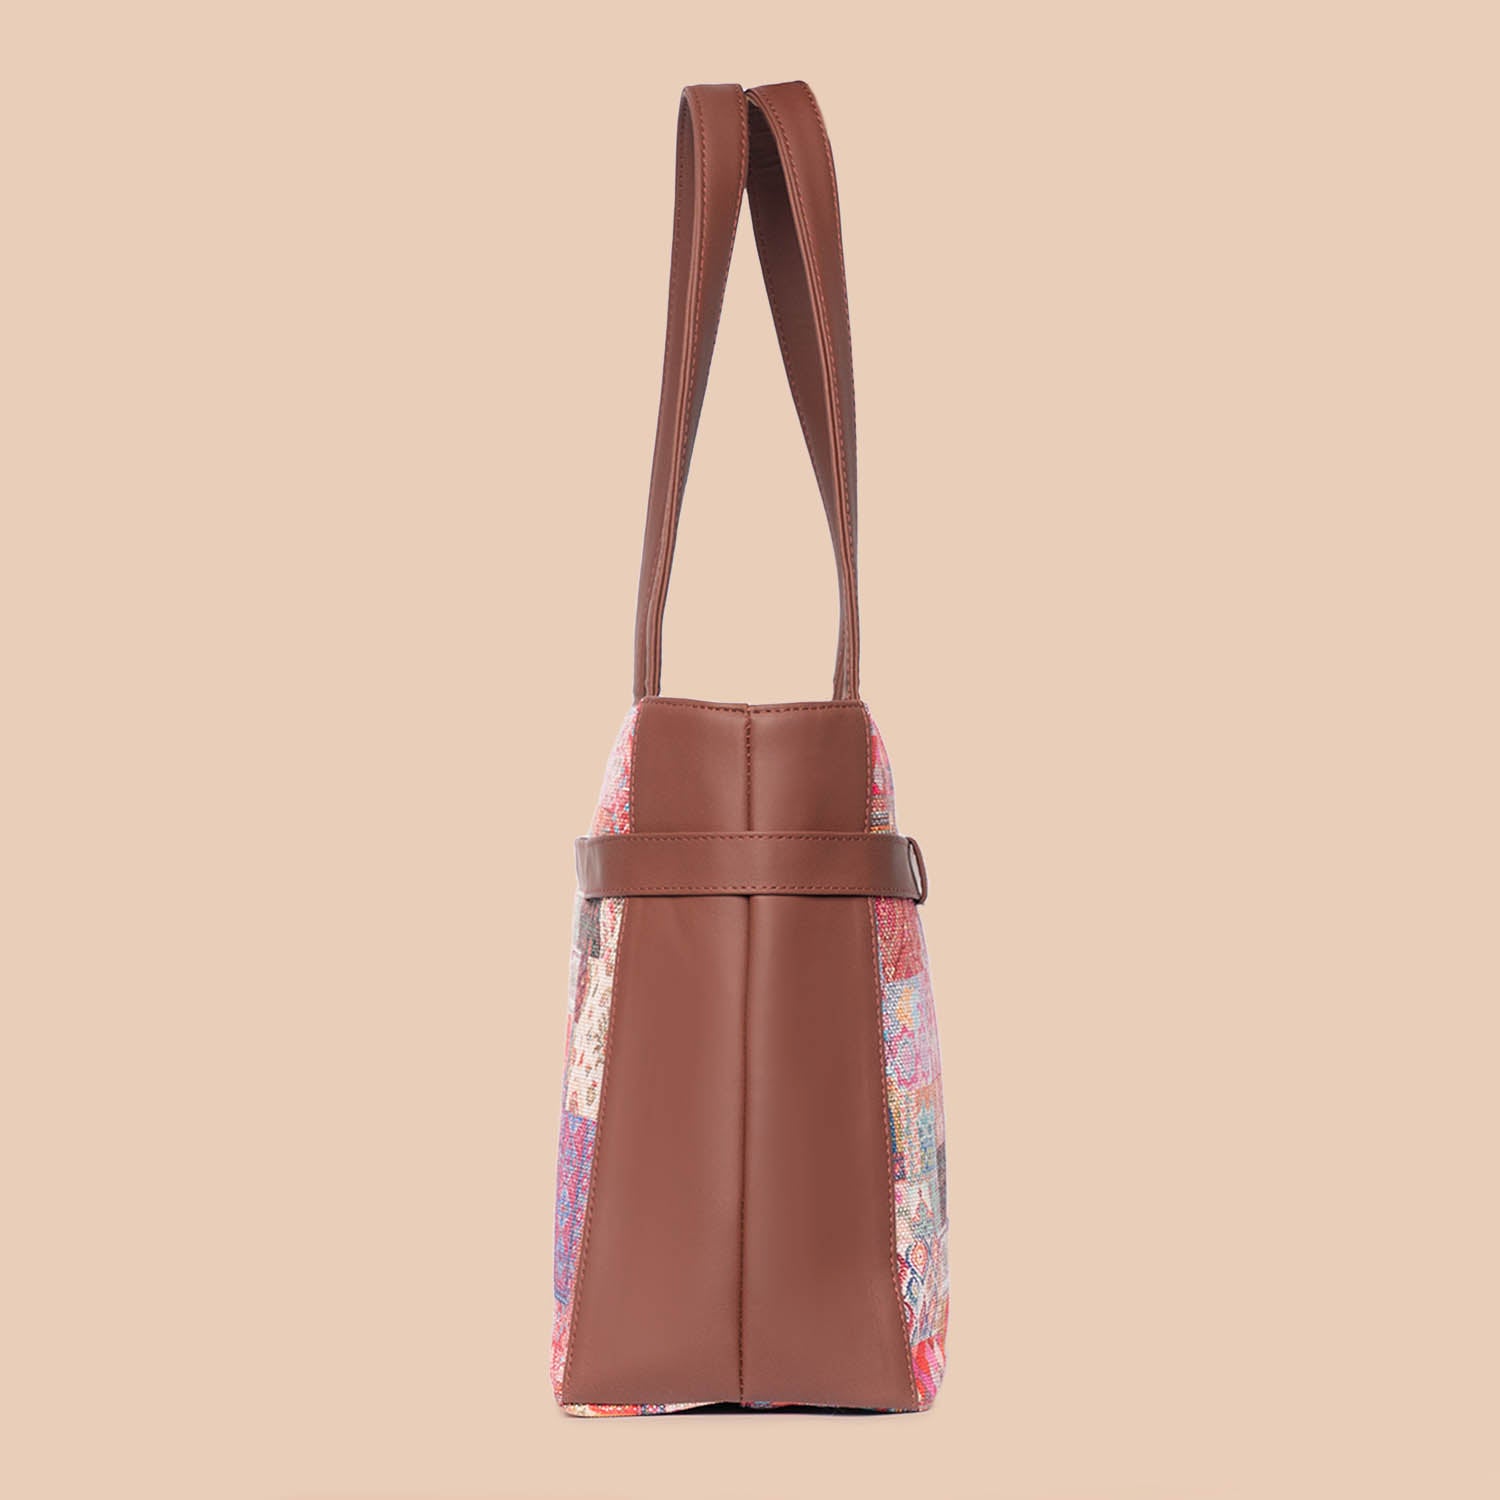 Kutch Gamthi & Mughal Art Multicolor - Statement Office Bag & U-Shaped Sling Bag Combo